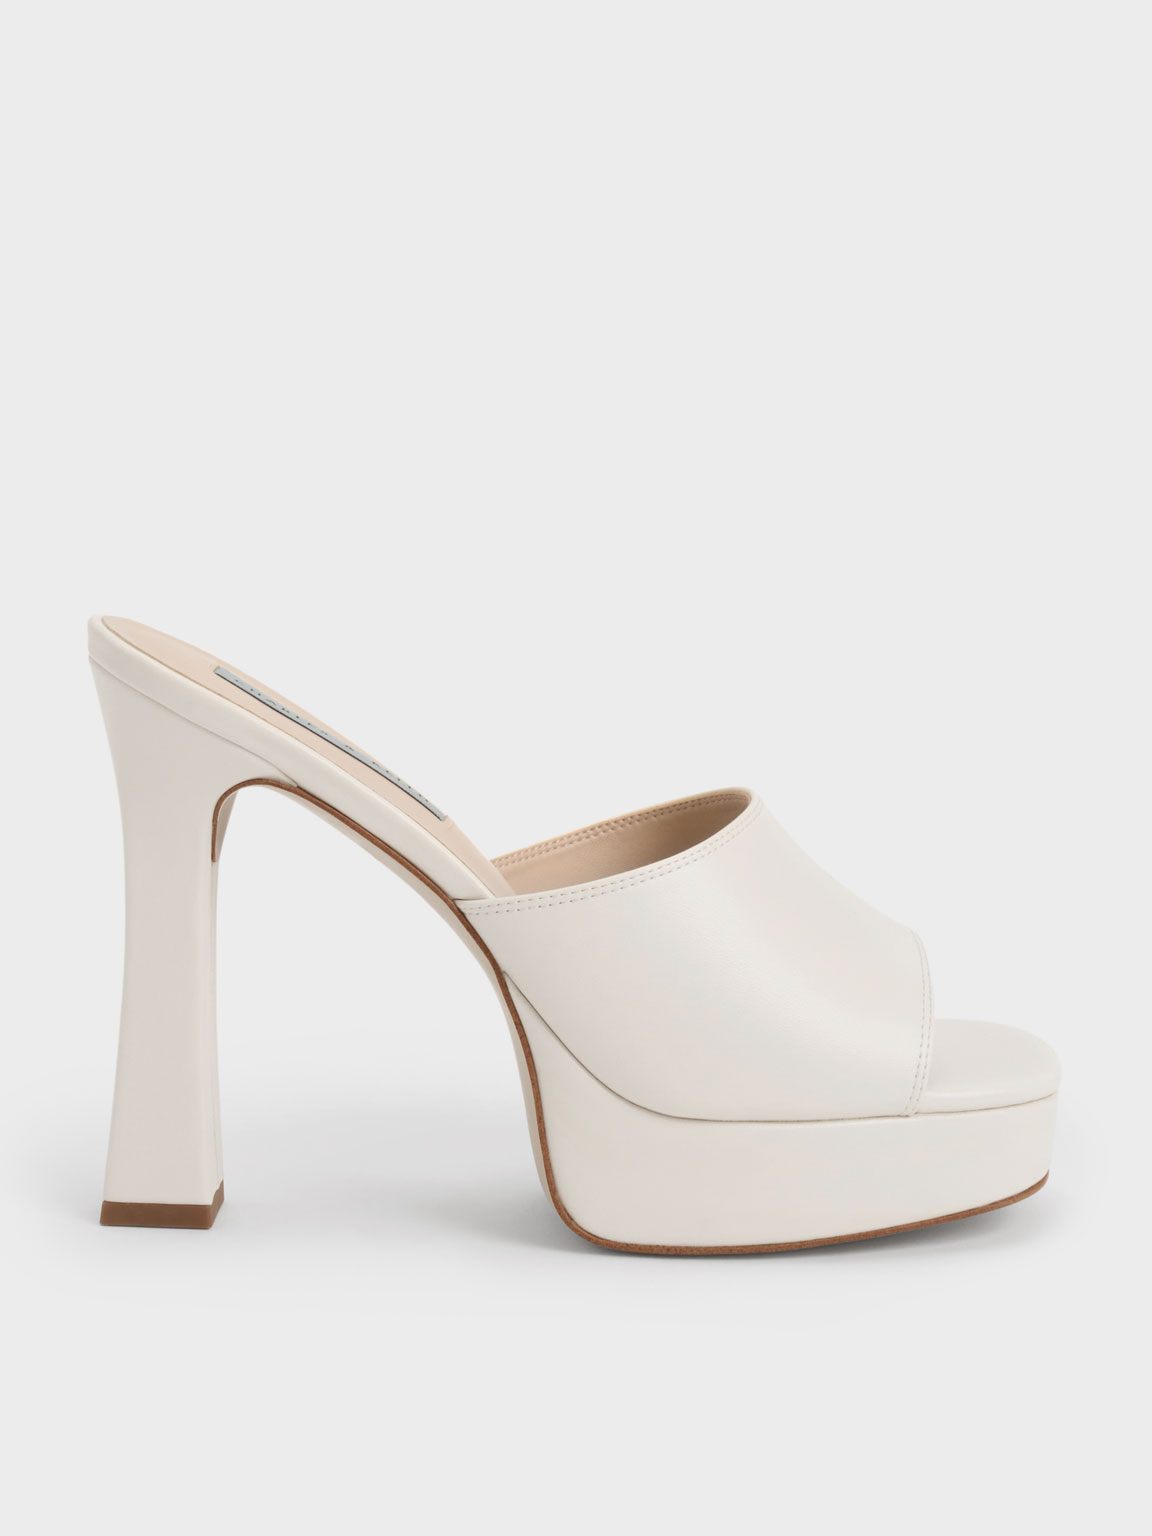 ASOS DESIGN Nocturnal platform high heeled sandals in off white | ASOS